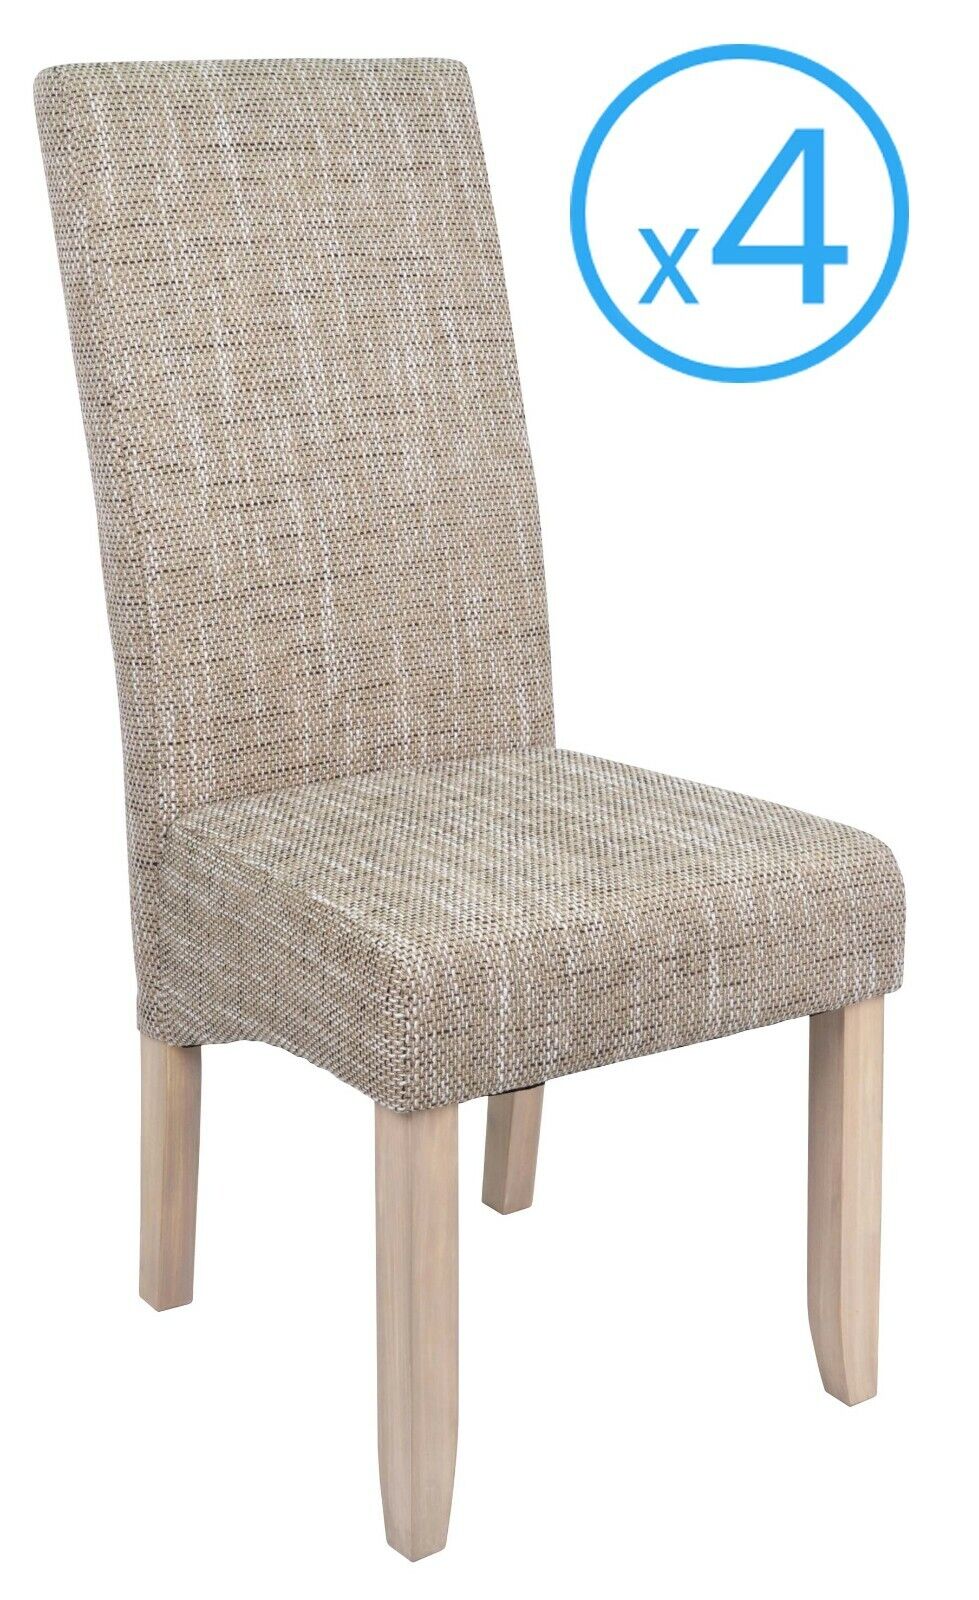 Pack 4 sillas comedor-salón tela color arena estructura de madera 47x108x62cm